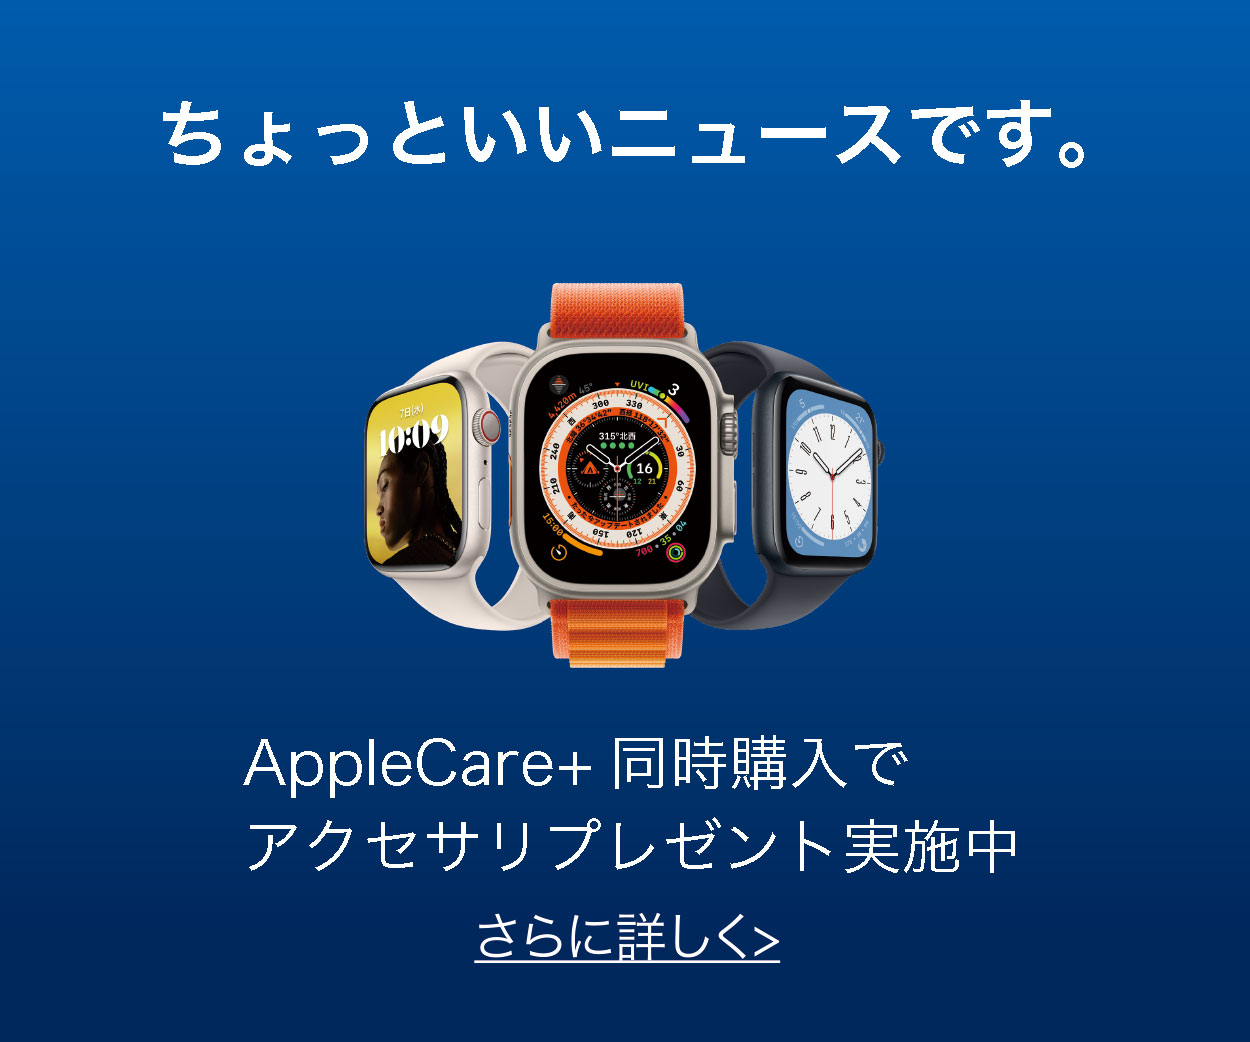 AppleWatch Apple Care+同時購入でアクセサリプレゼント実施中